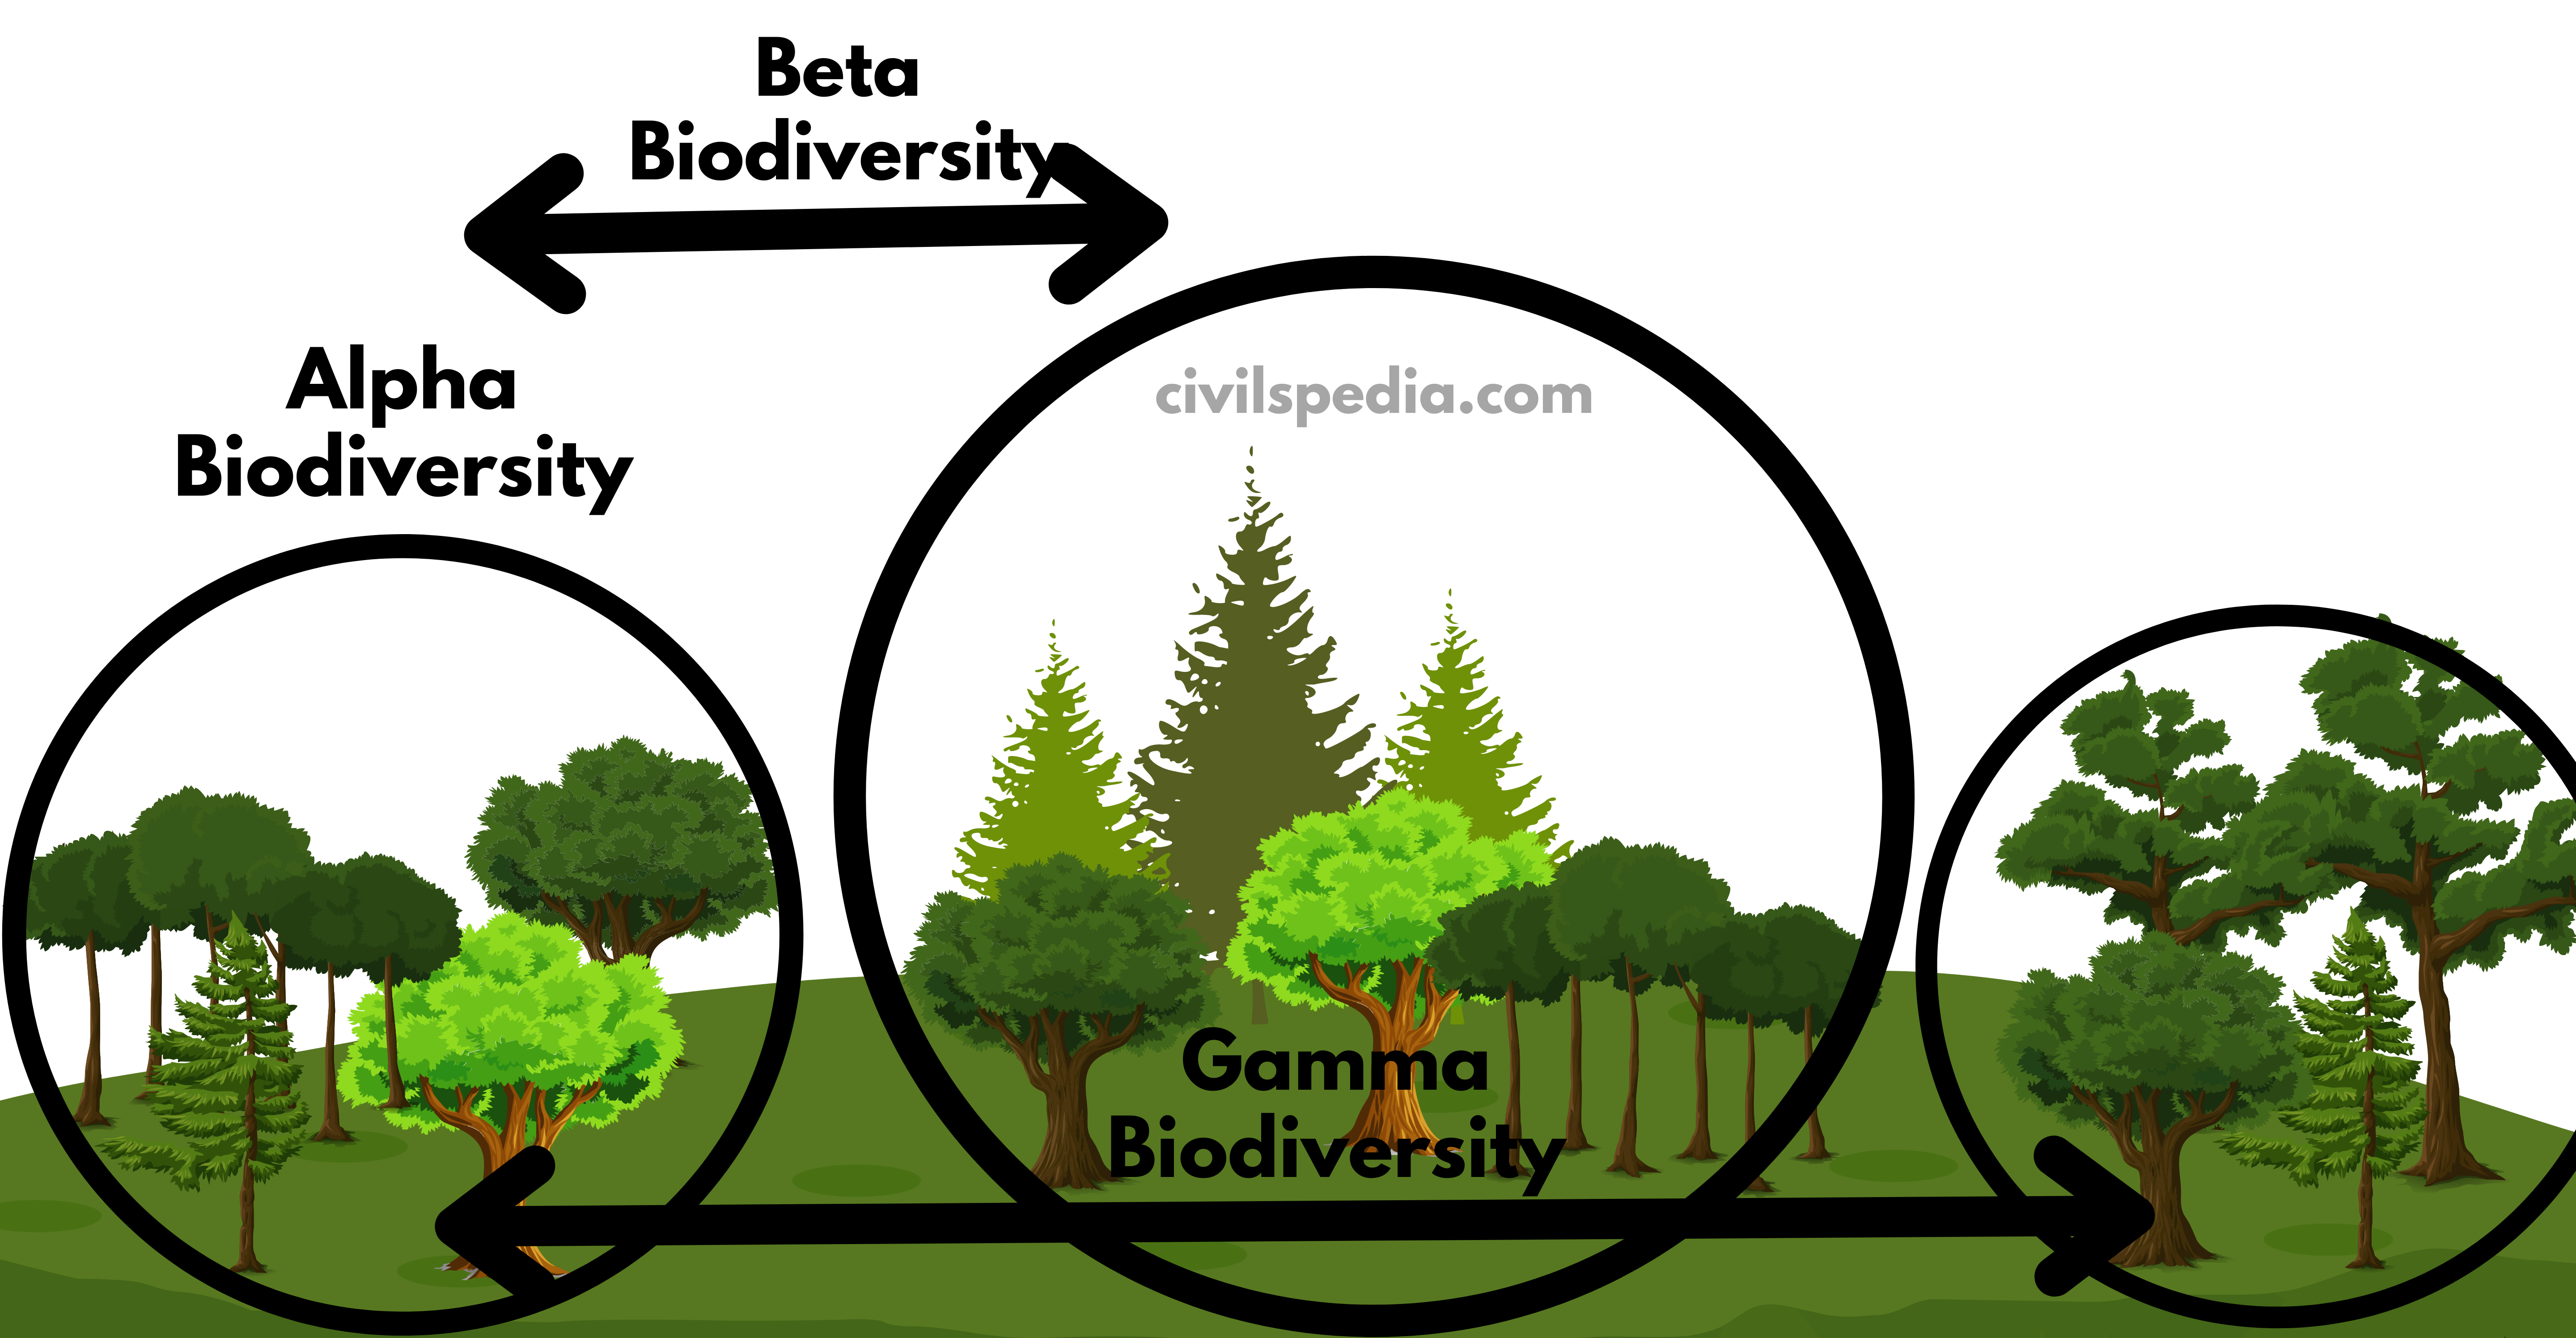 Alpha, Beta and Gamma Biodiversity 